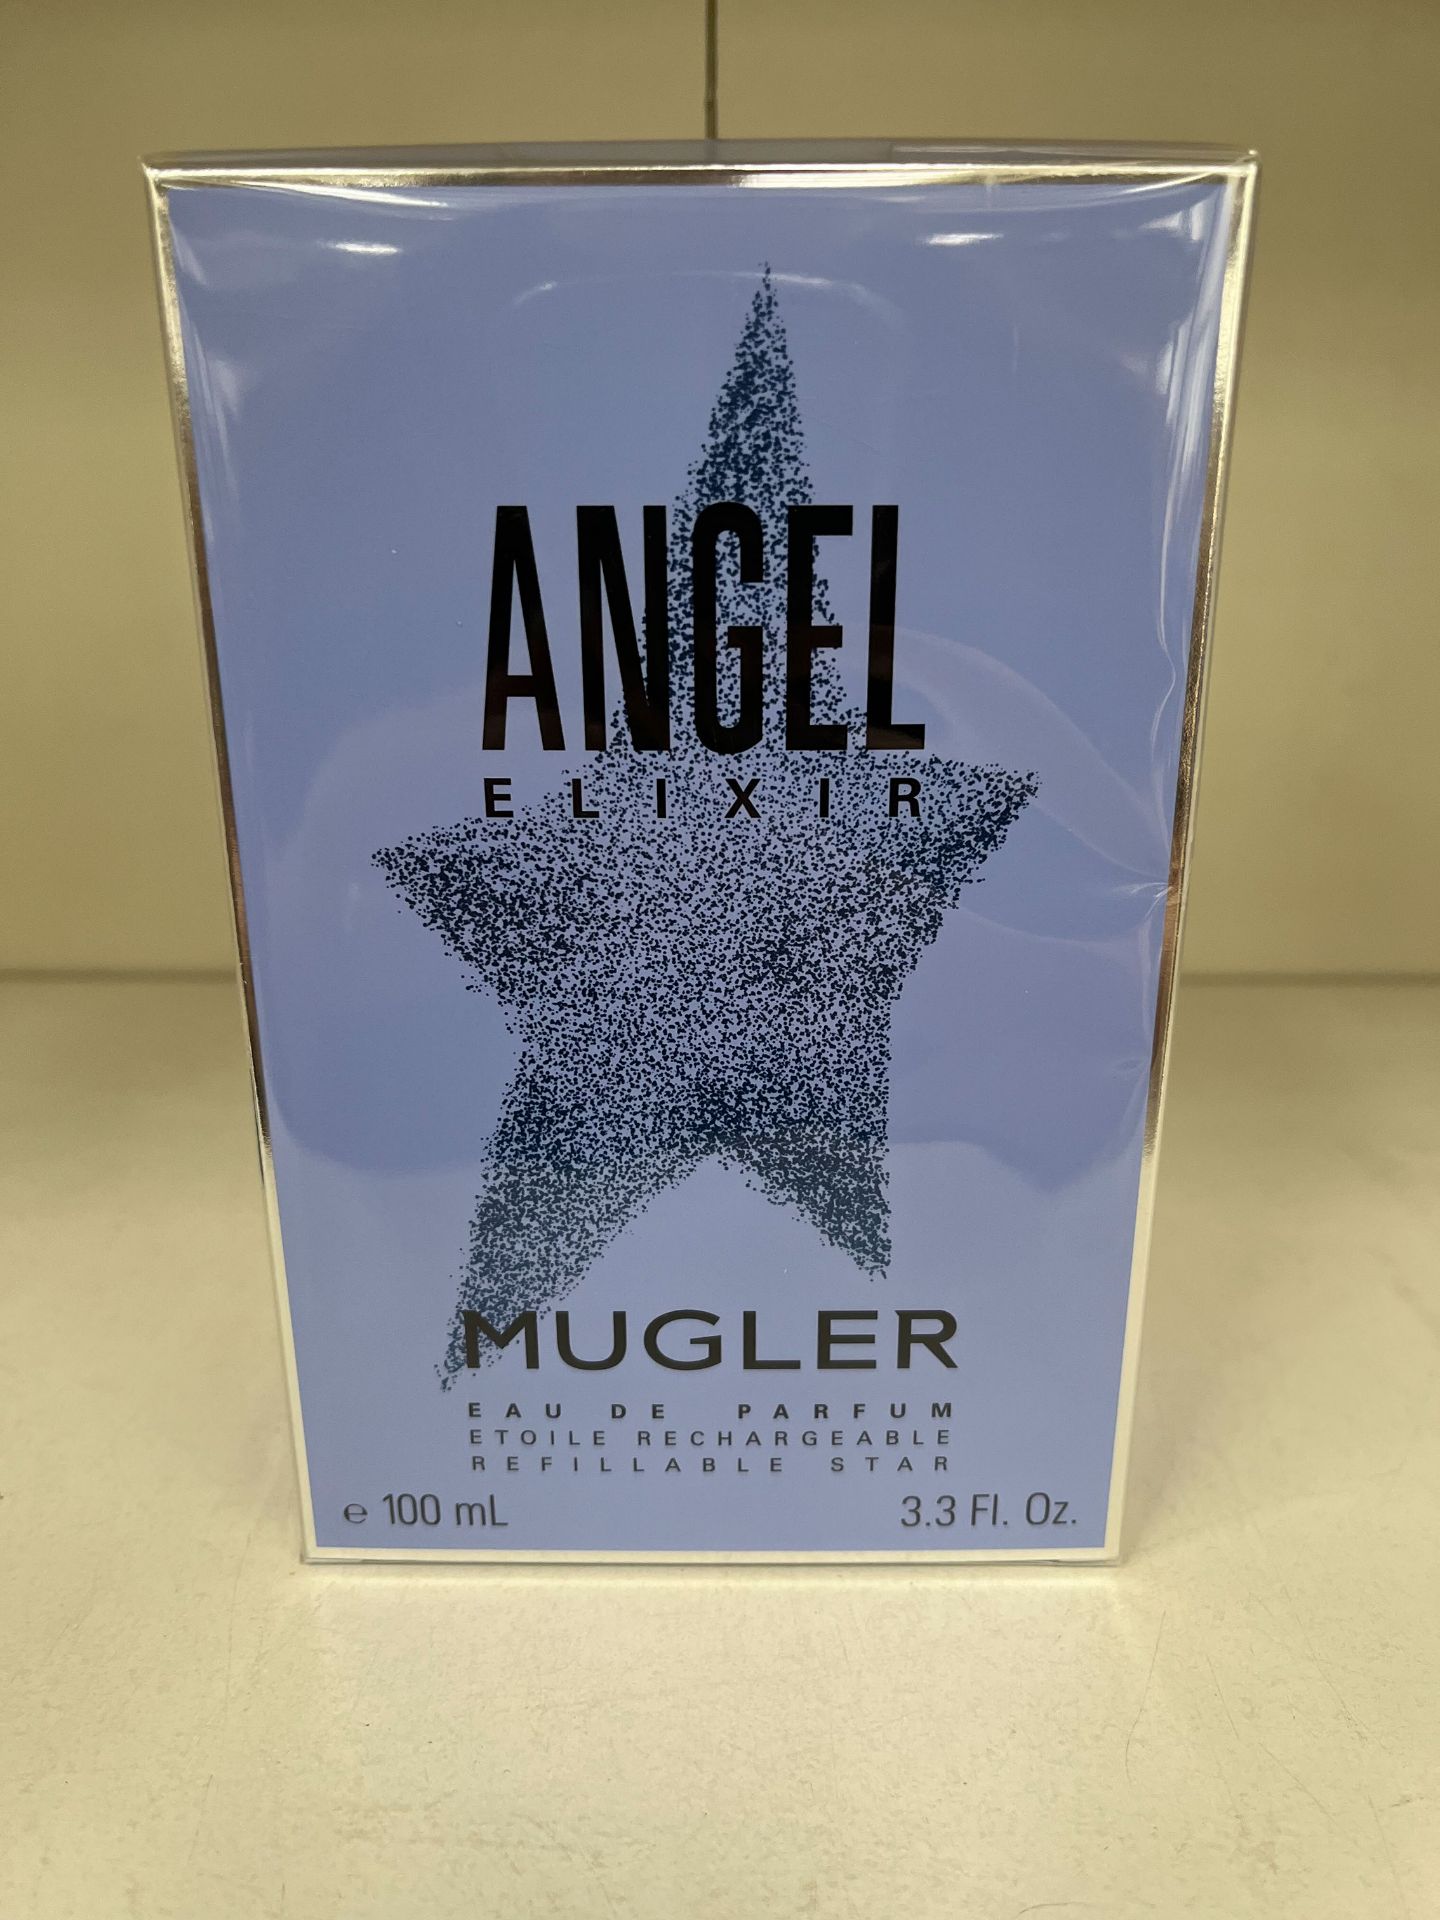 1x 100ml Mugler Alien Elixir Refillable Star